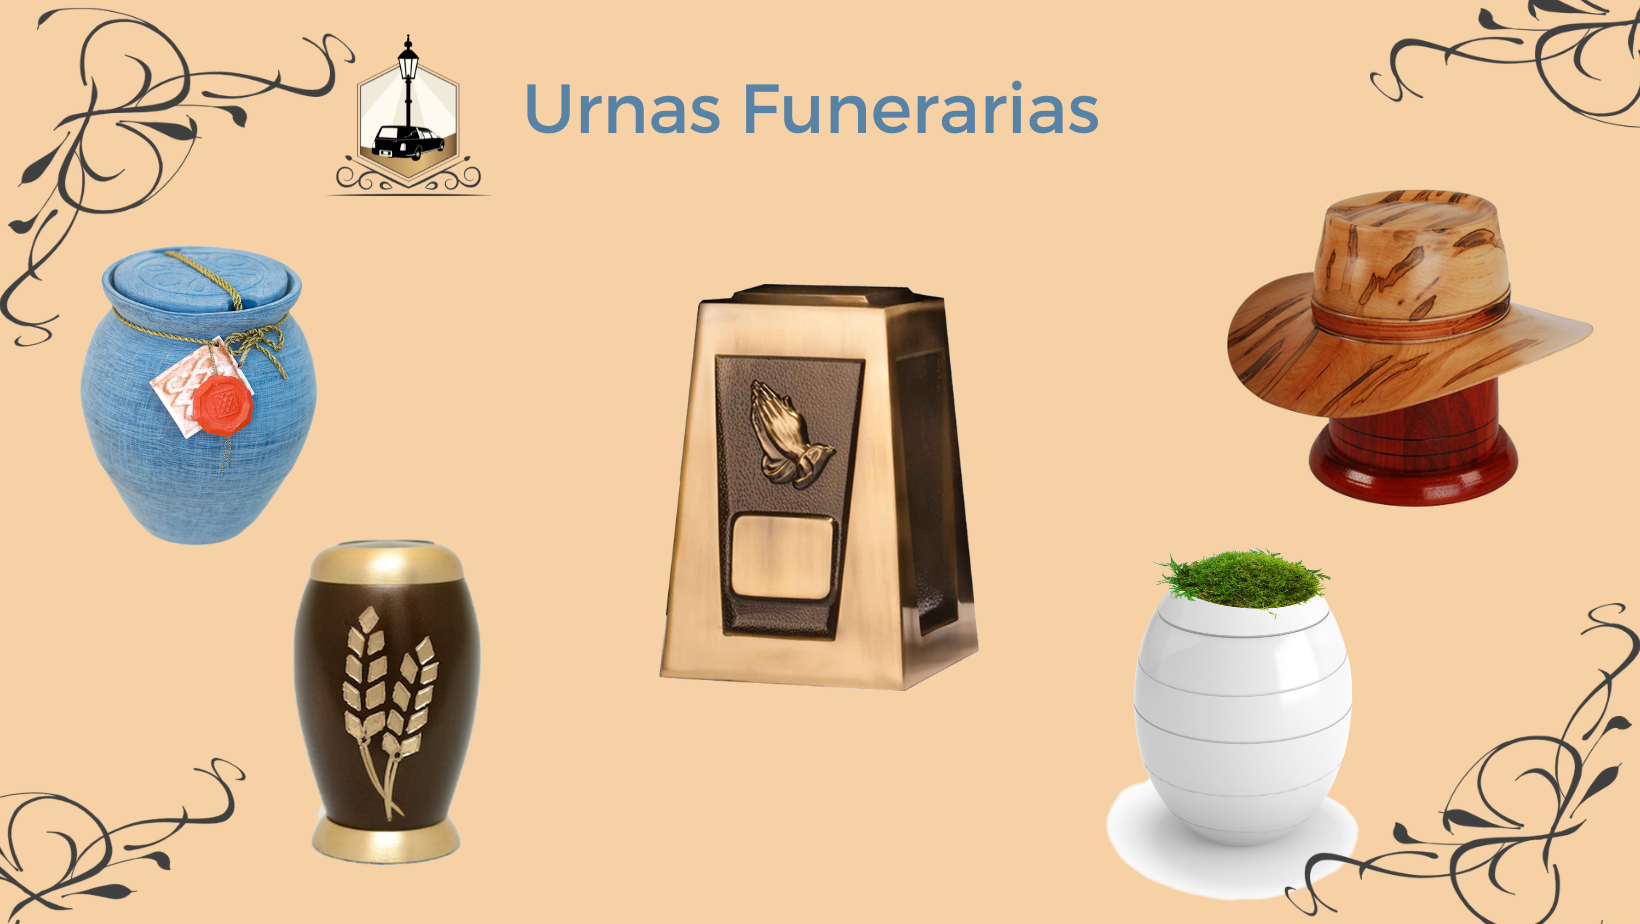 Urnas funerarias